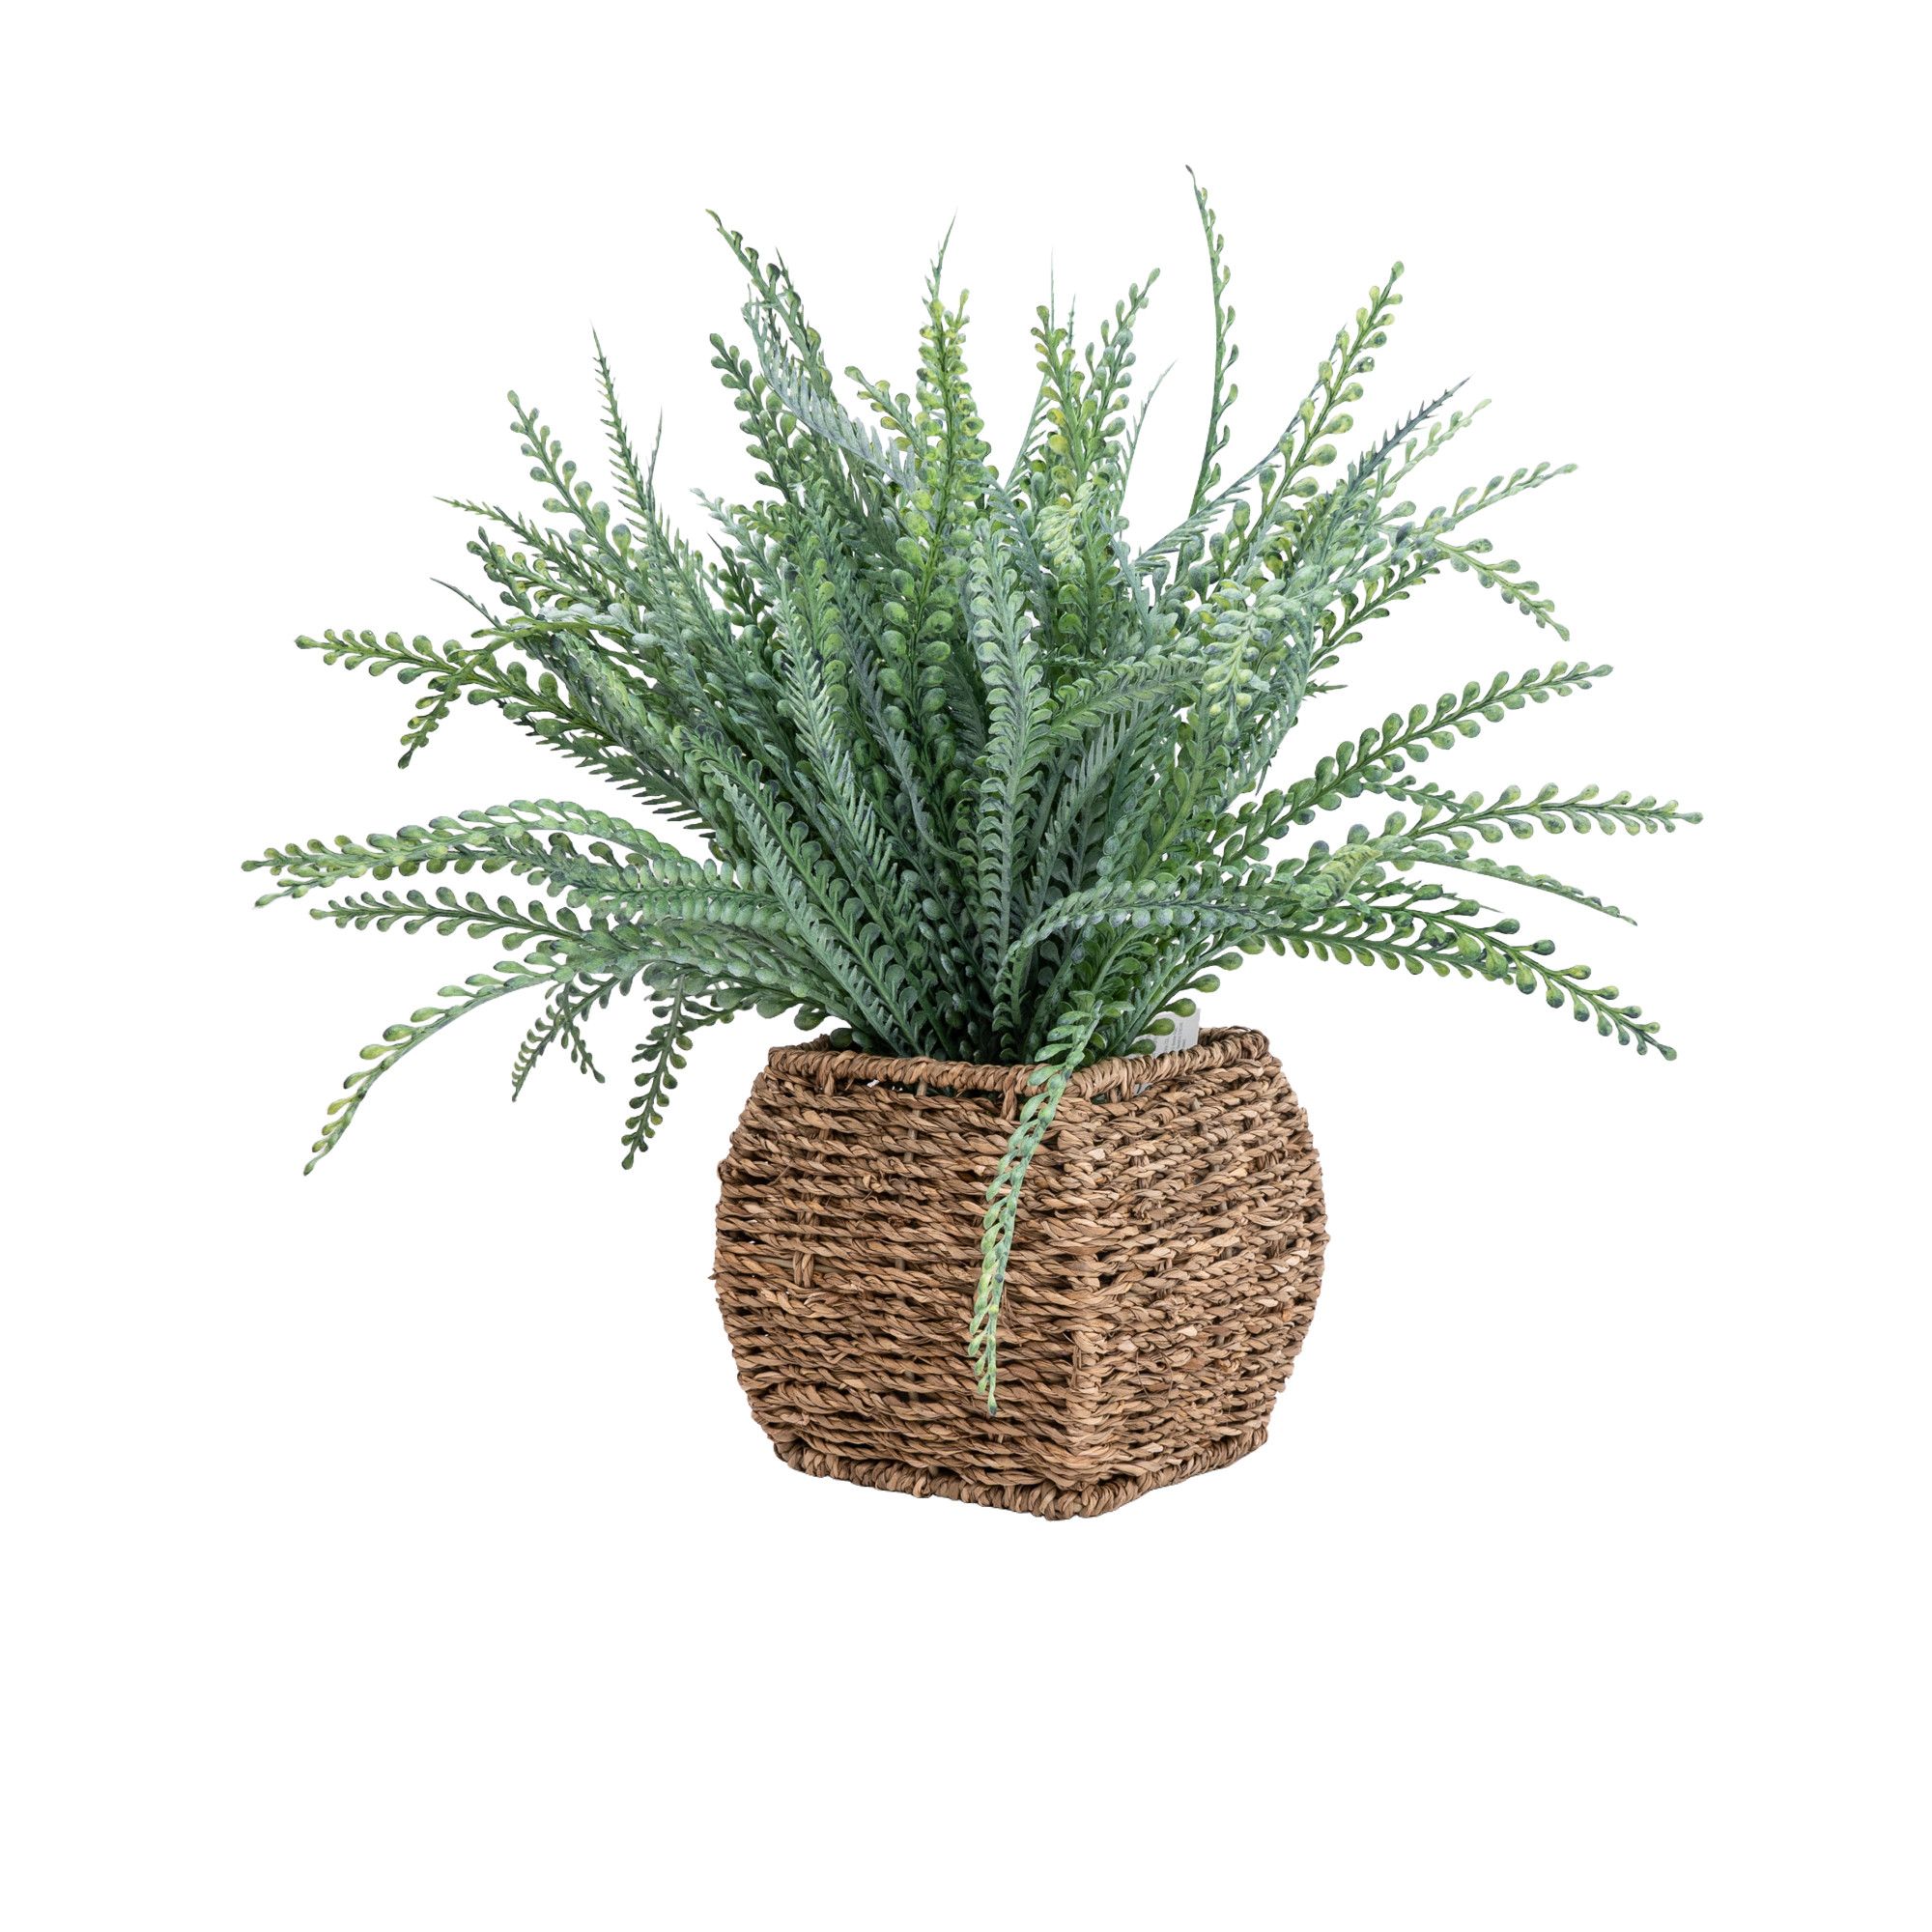 43cm Fern Artificial plant in Brown Seagrass Basket